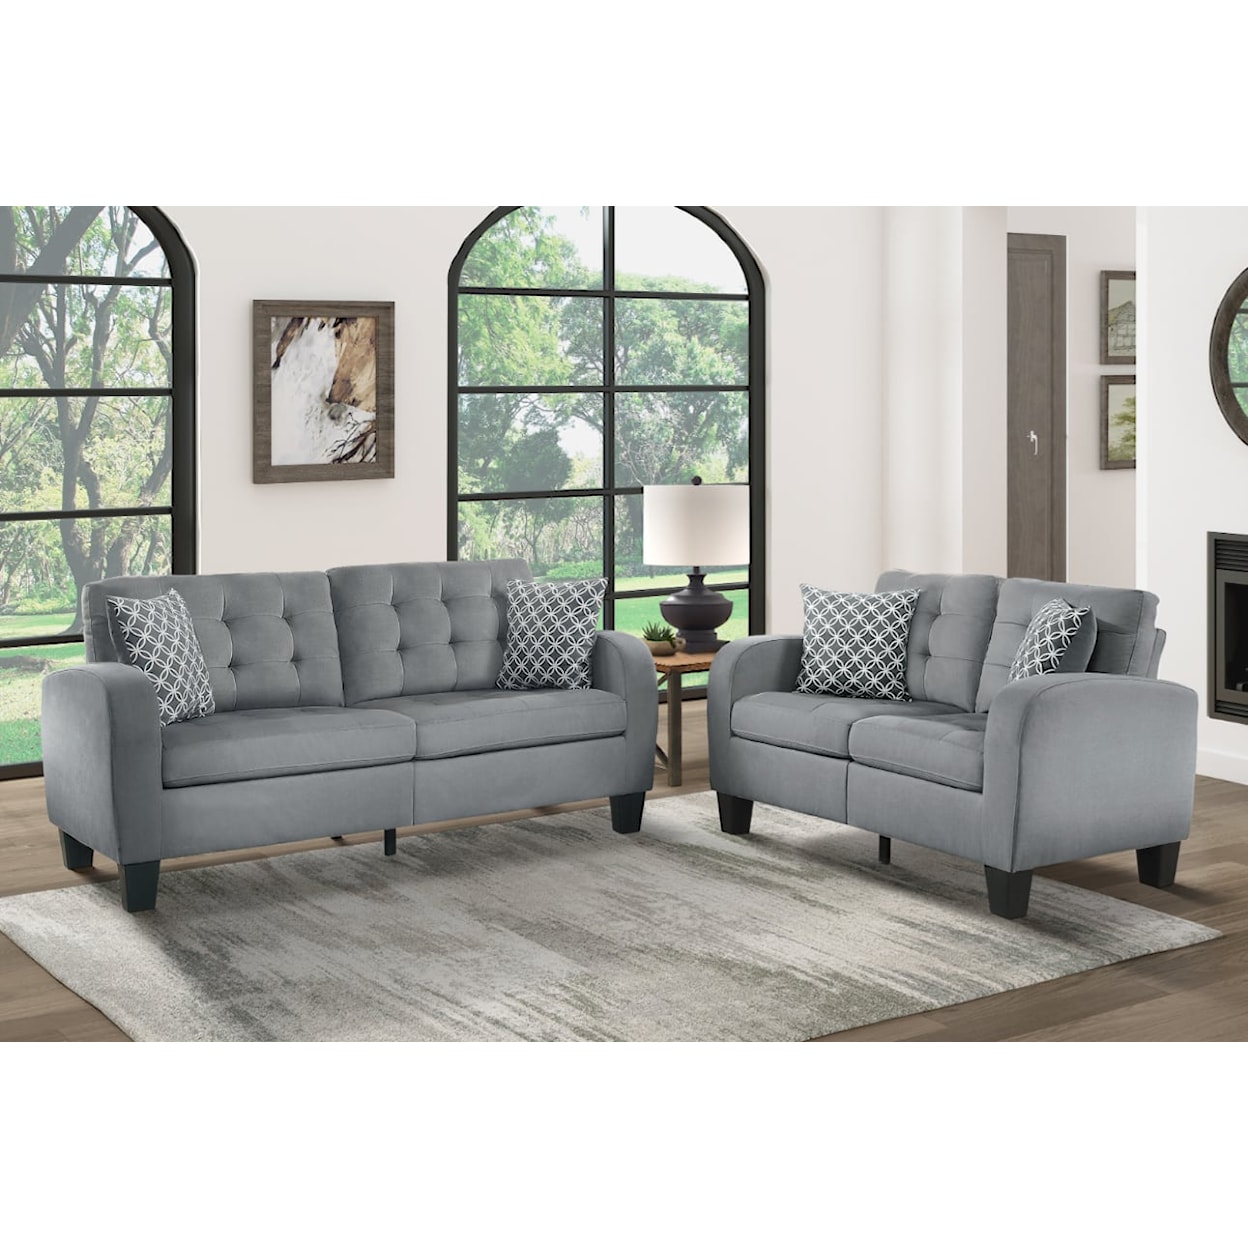 Homelegance Furniture Sinclair 2-Piece Living Room Set